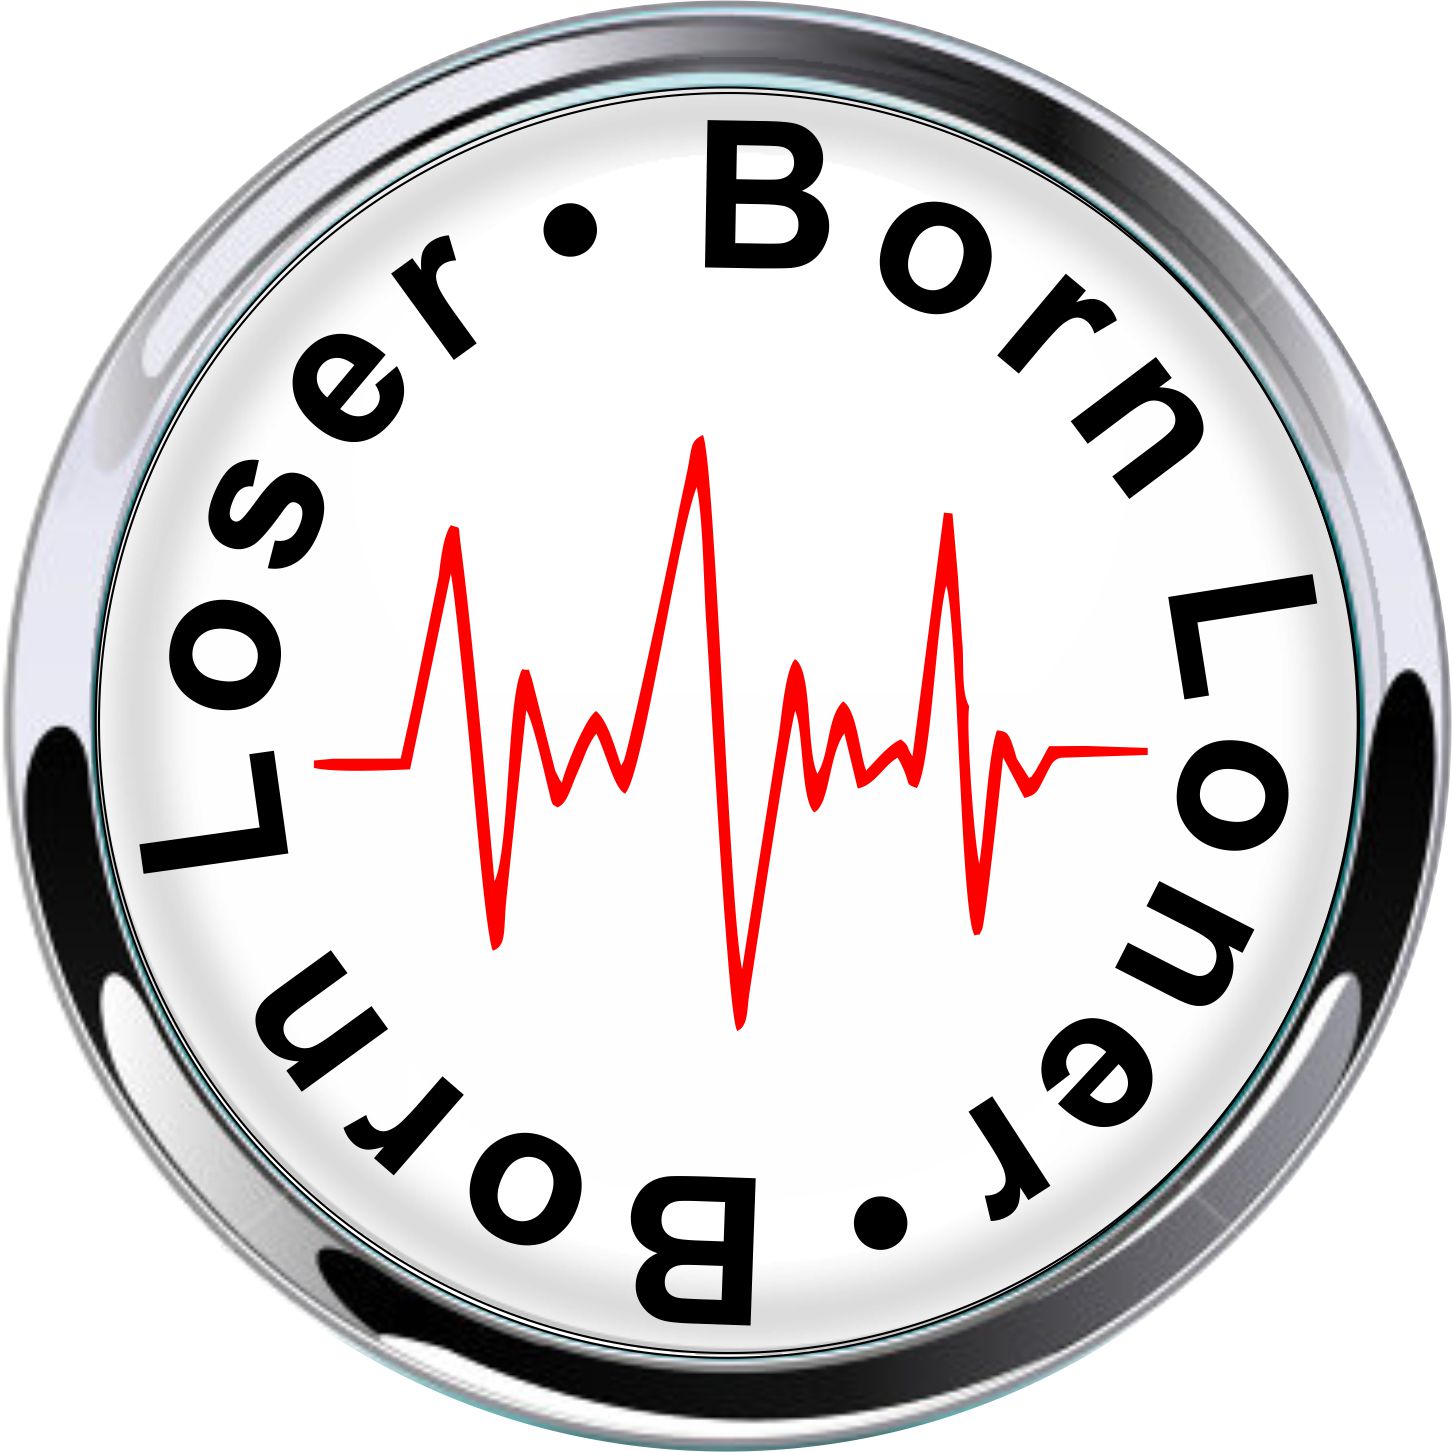 Born Loner Born Loser  - custom emblem